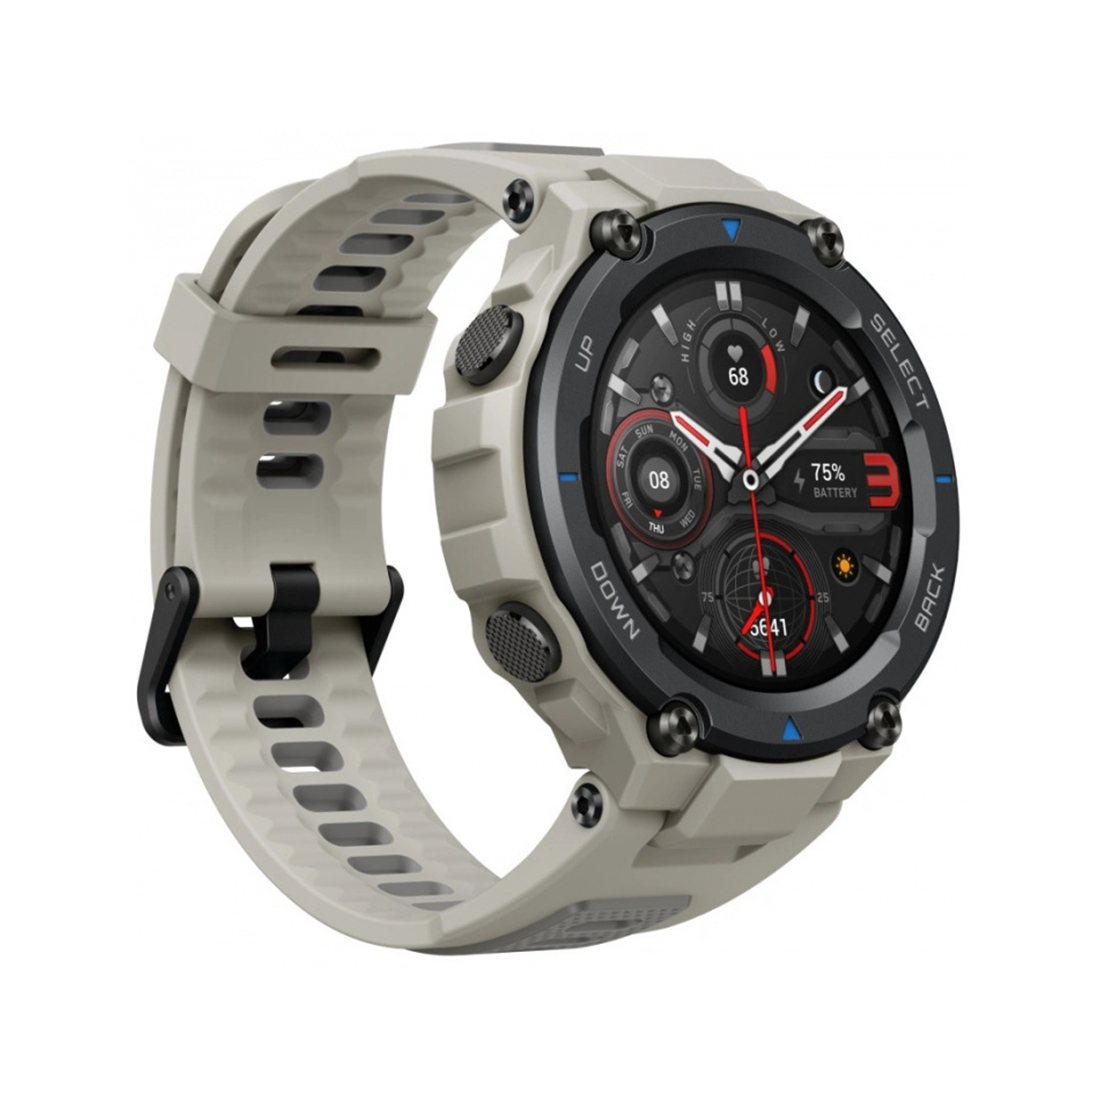 Смарт часы, Amazfit, T-Rex Pro A2013, HD-дисплей AMOLED 1.3 дюйма, Разрешение 360*360 pixel, GPS, GL